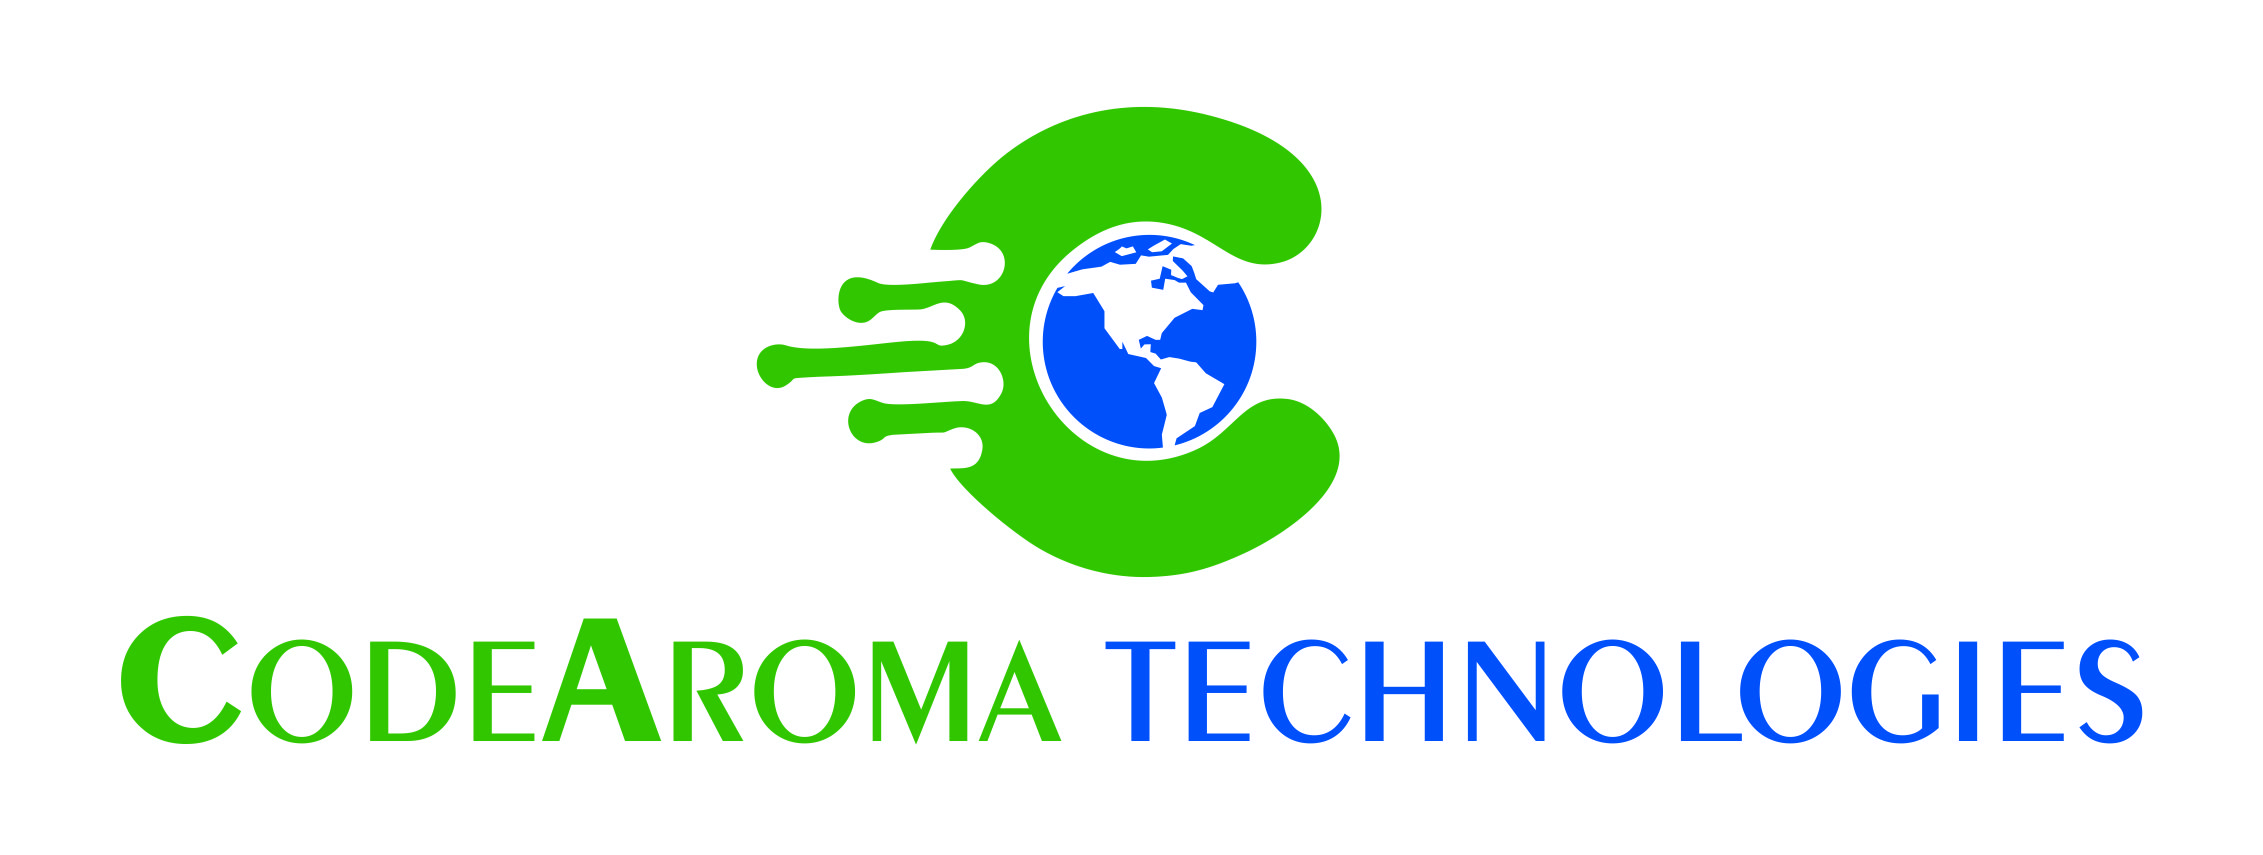 Codearoma Technologies Logo